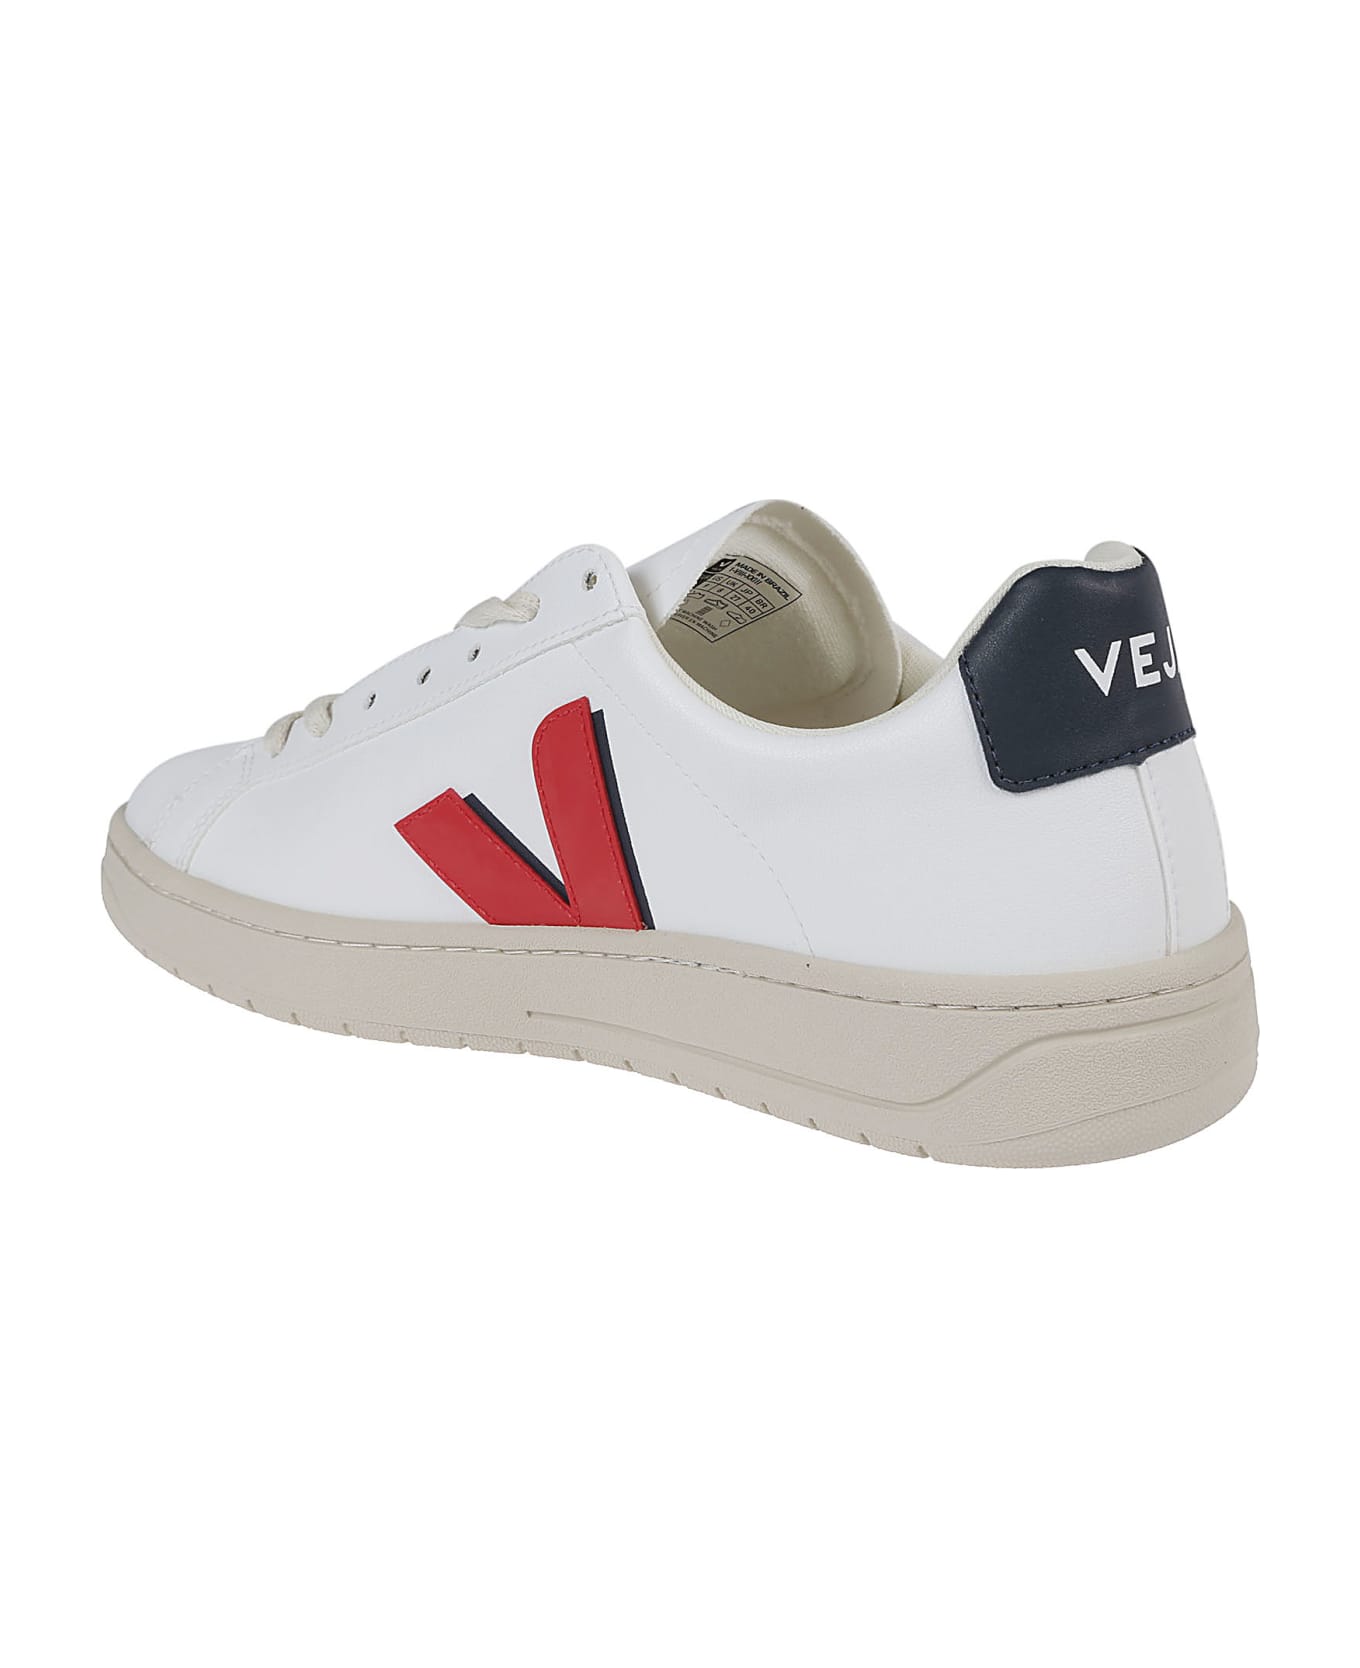 Veja Urca Sneakers - White/pekin/nautico